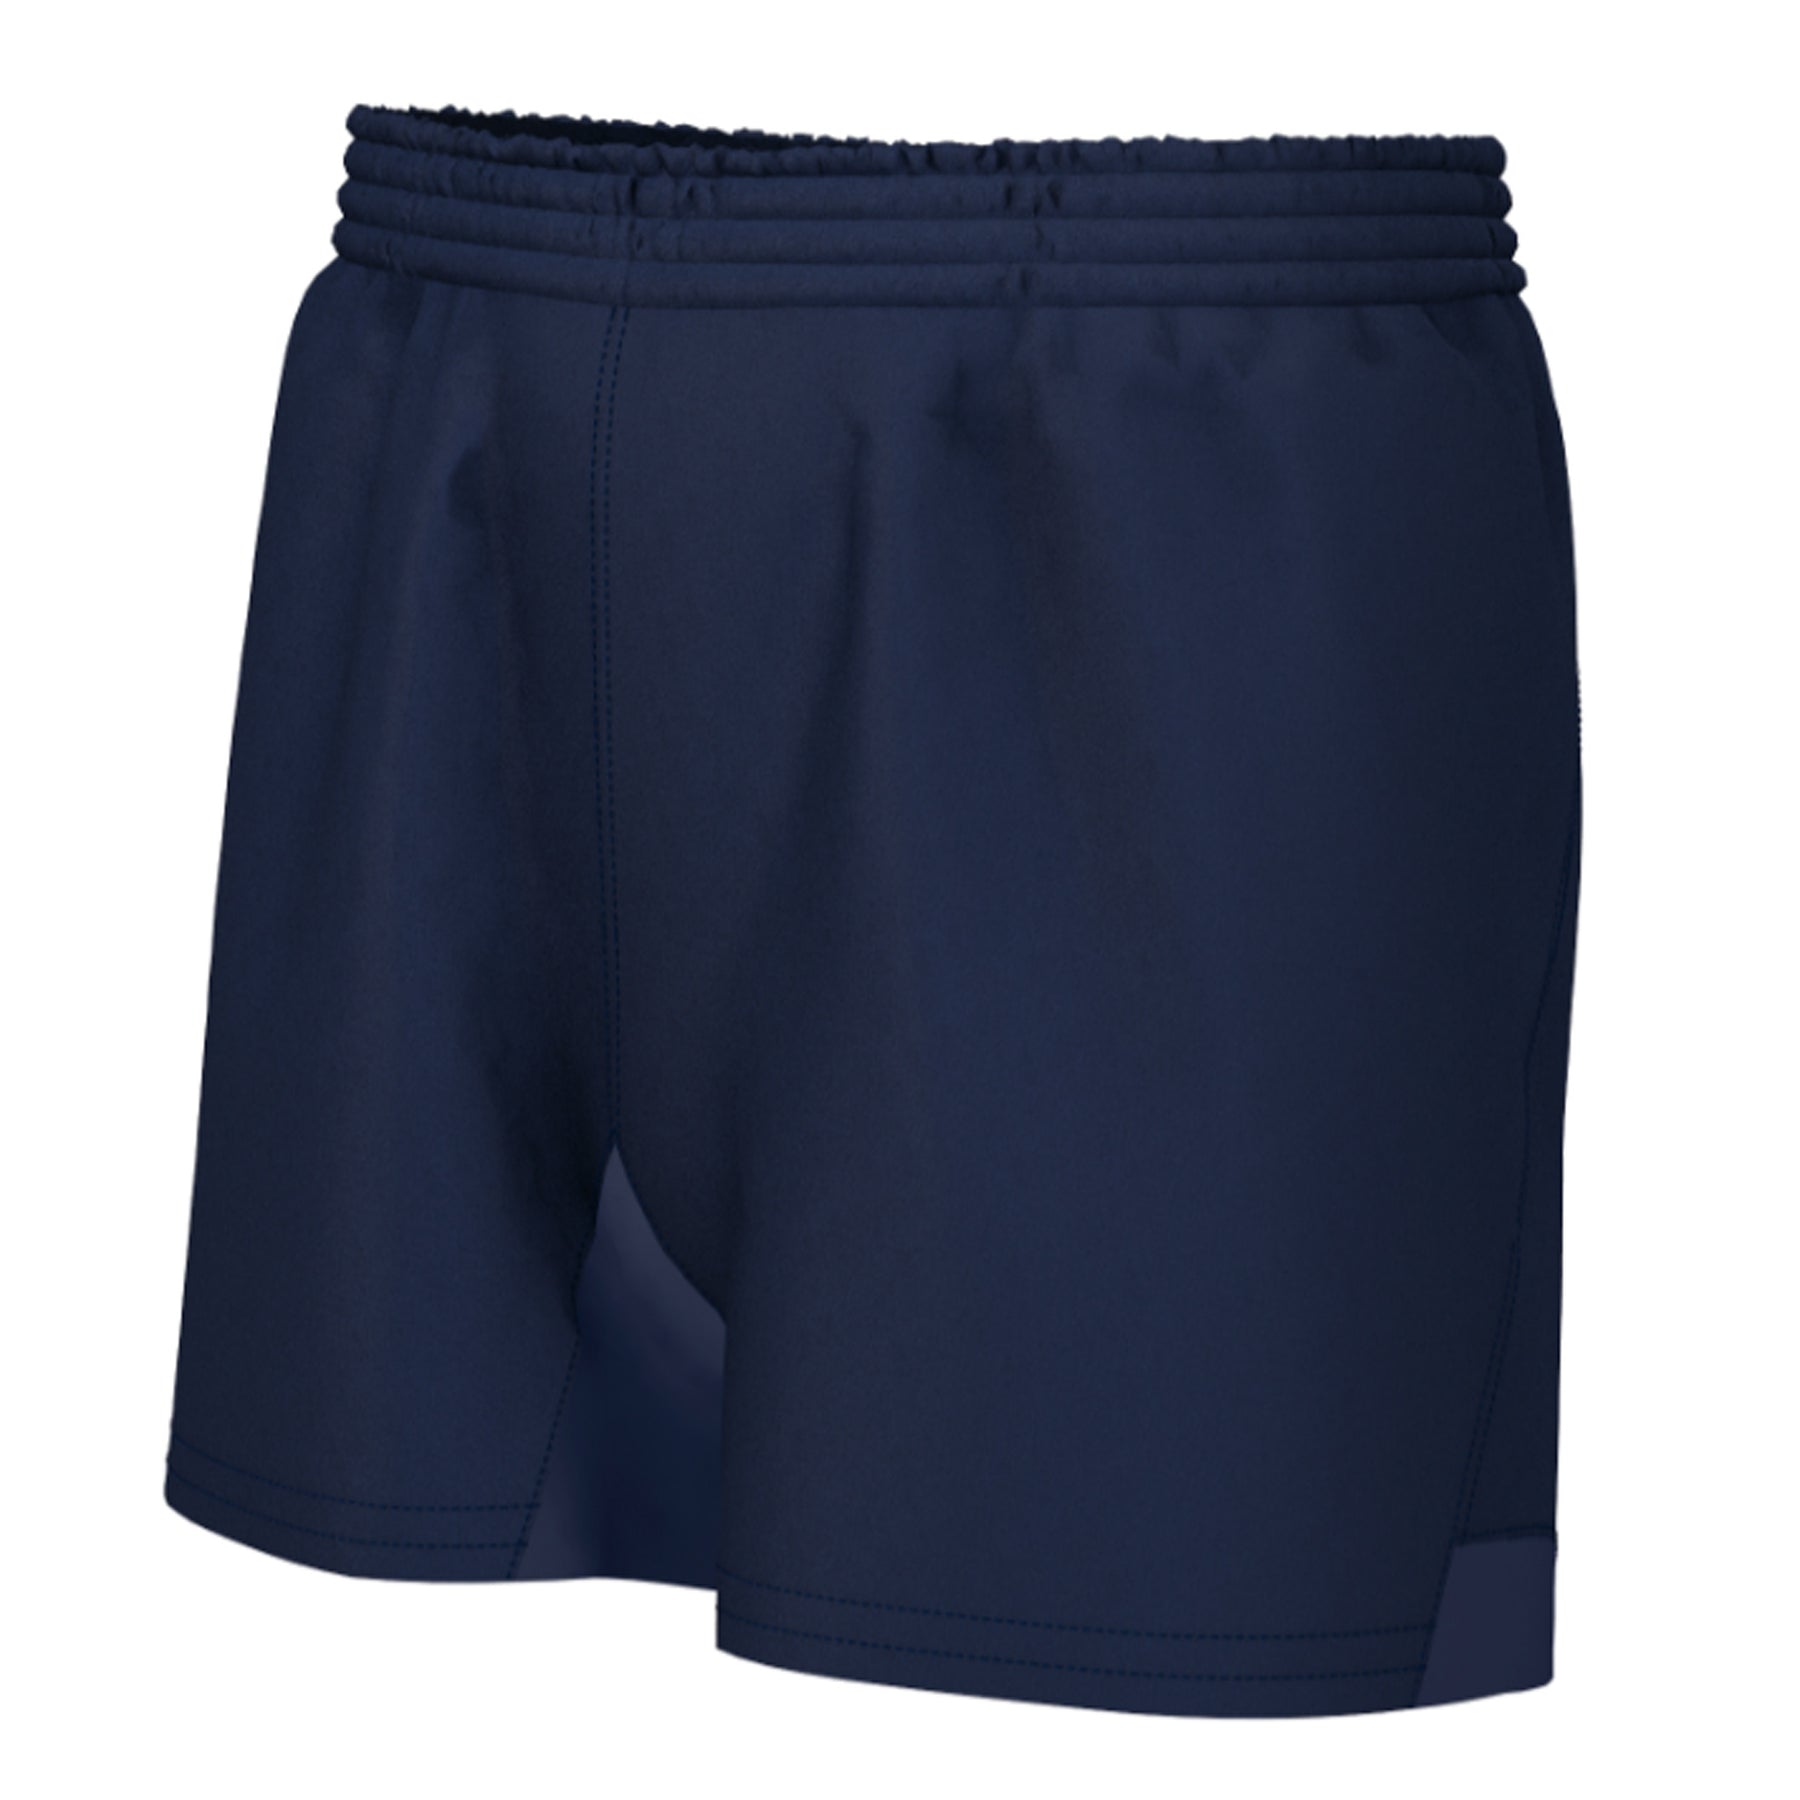 Piranha Rugby Shorts: Navy